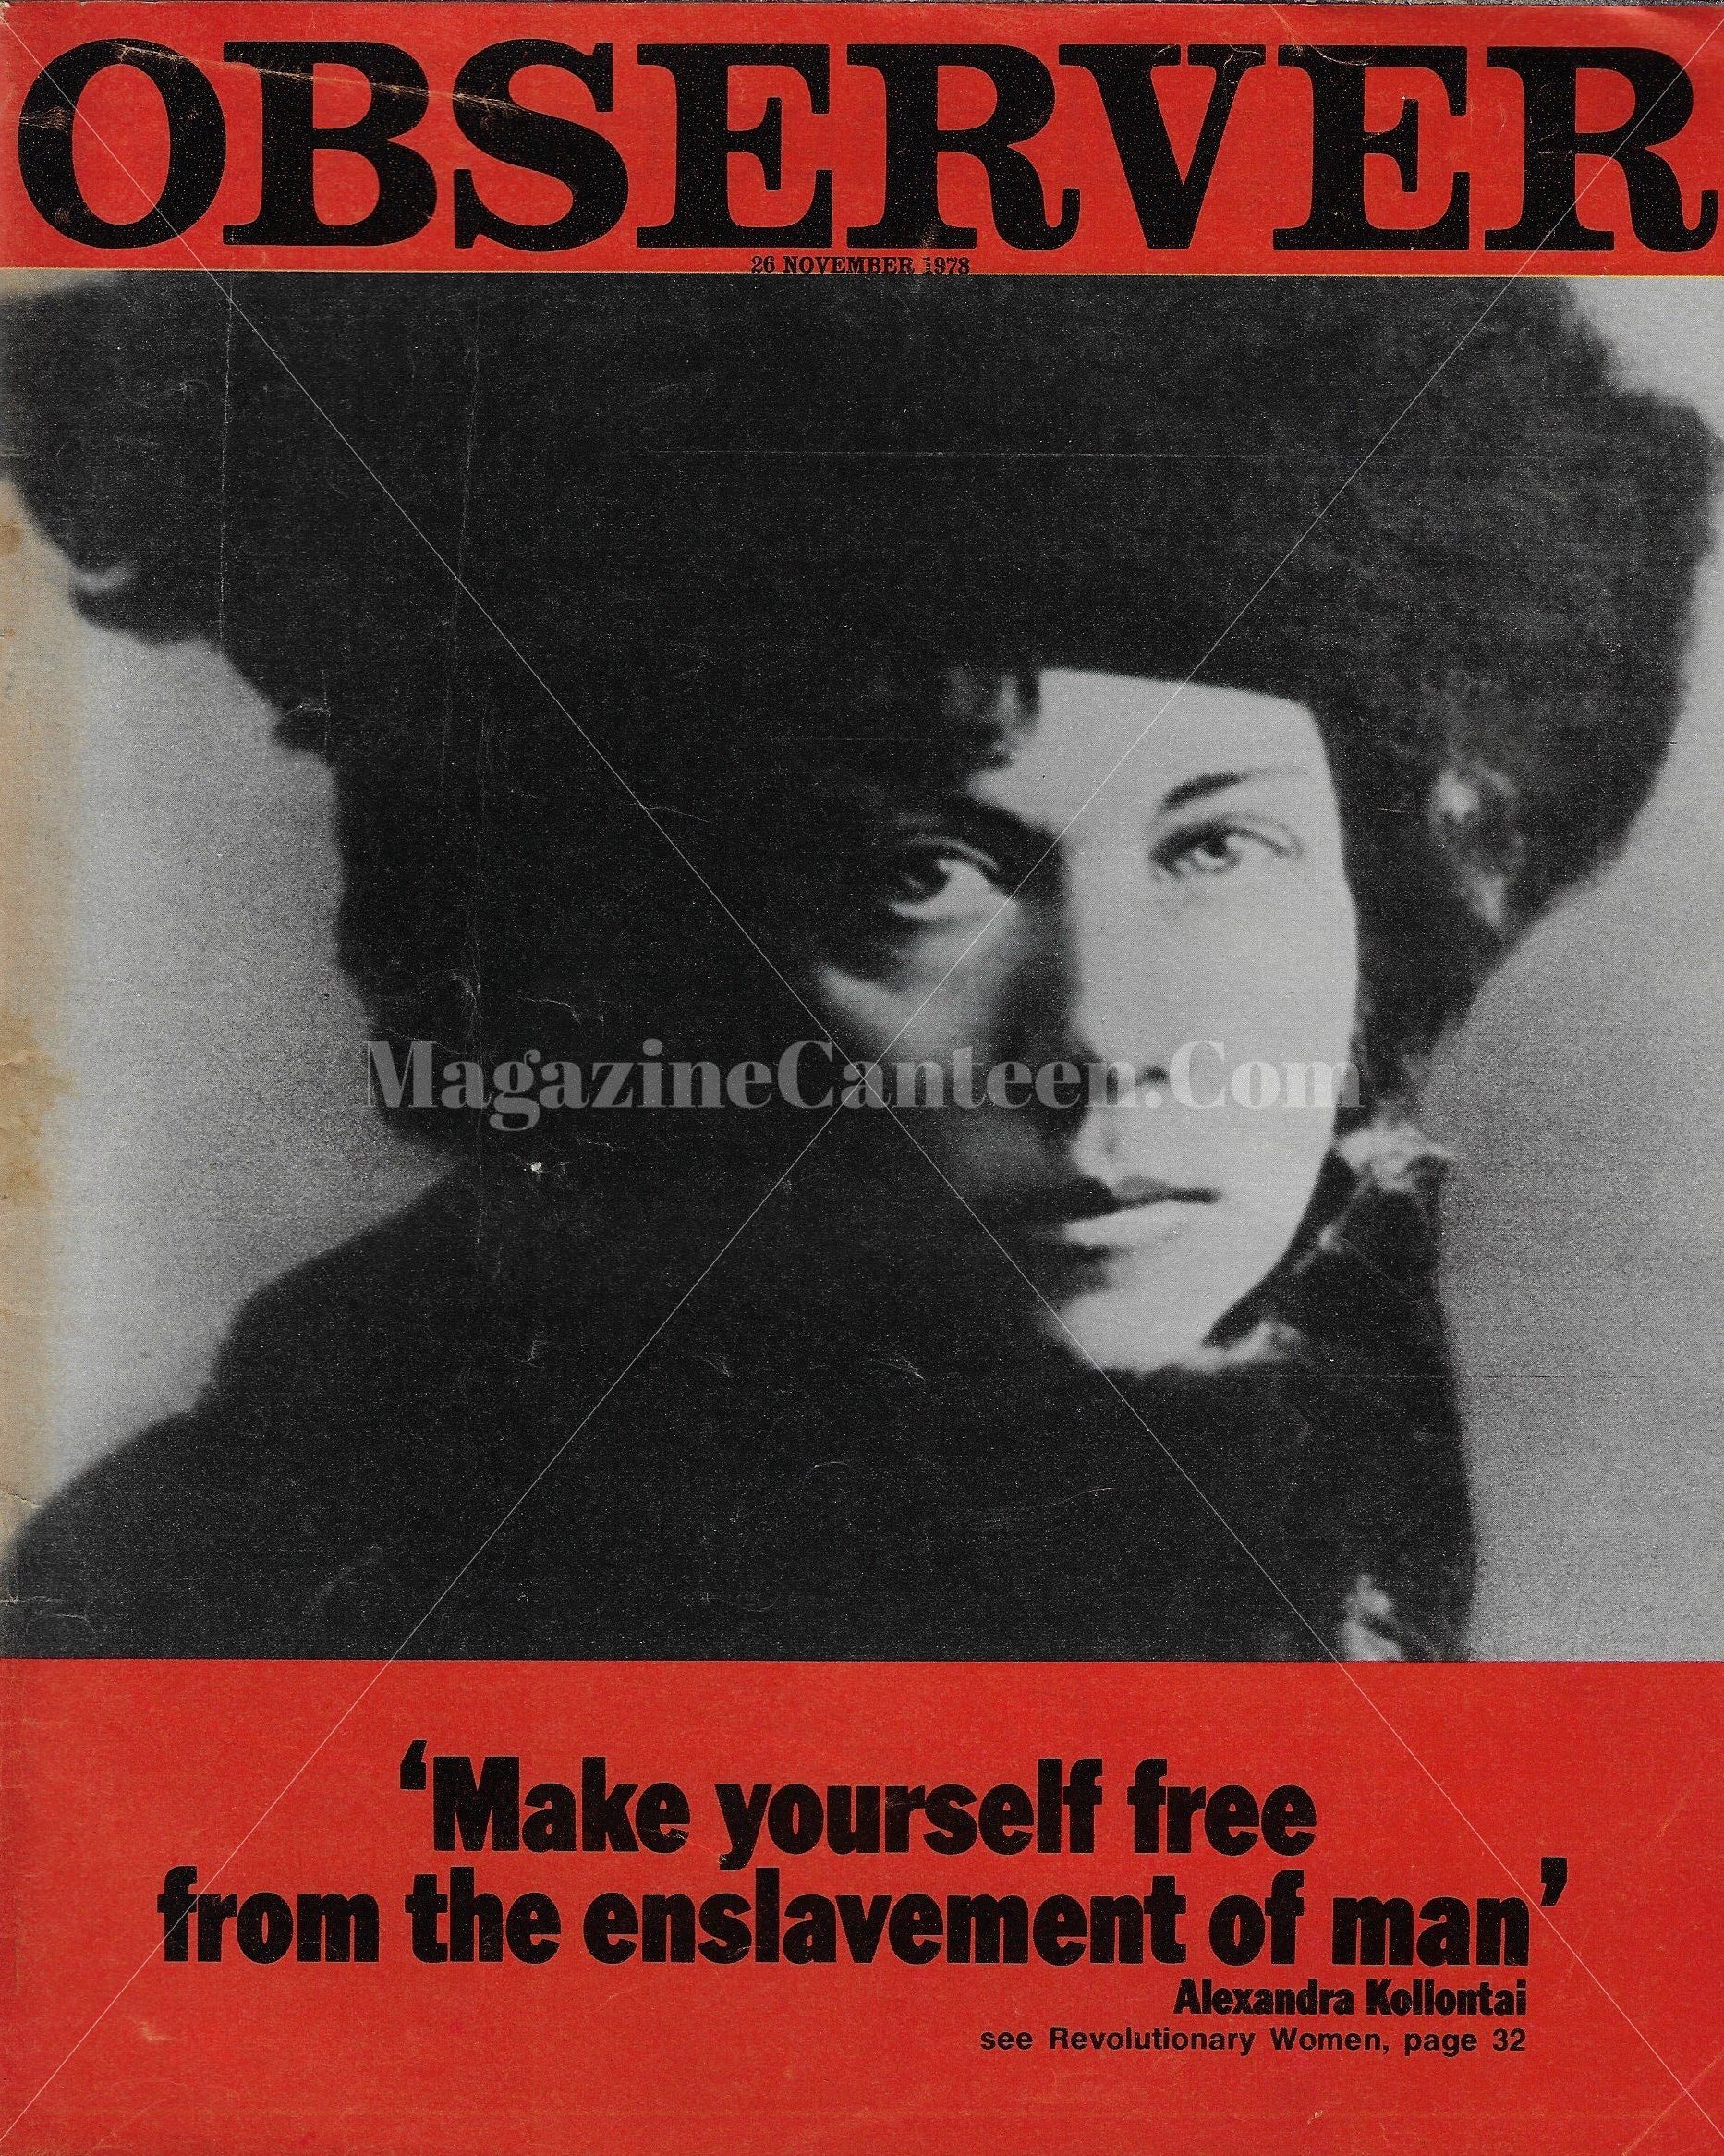 The Observer Magazine - Eddy Grant Leonard Rossiter